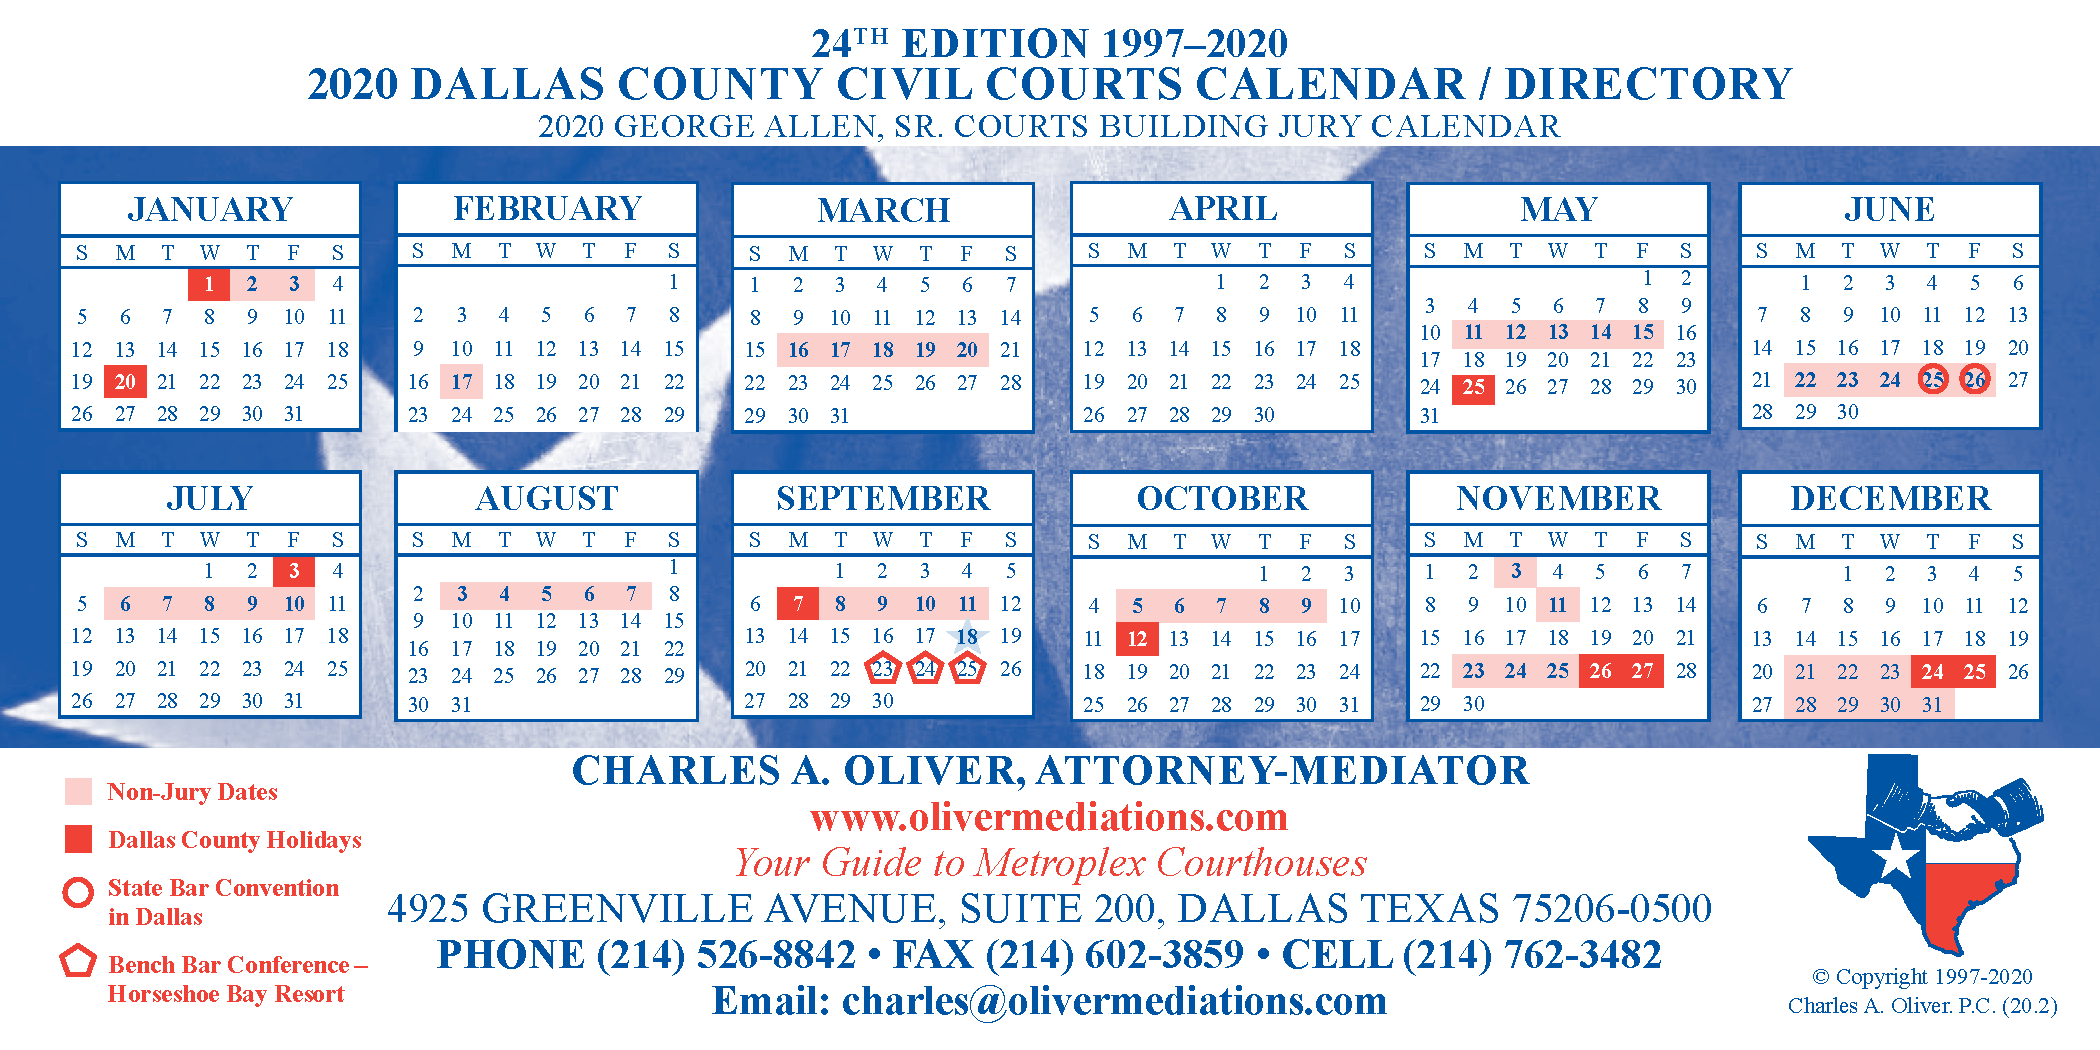 Charles Oliver Mediator 2020 Dallas County Civil Courts Calendar